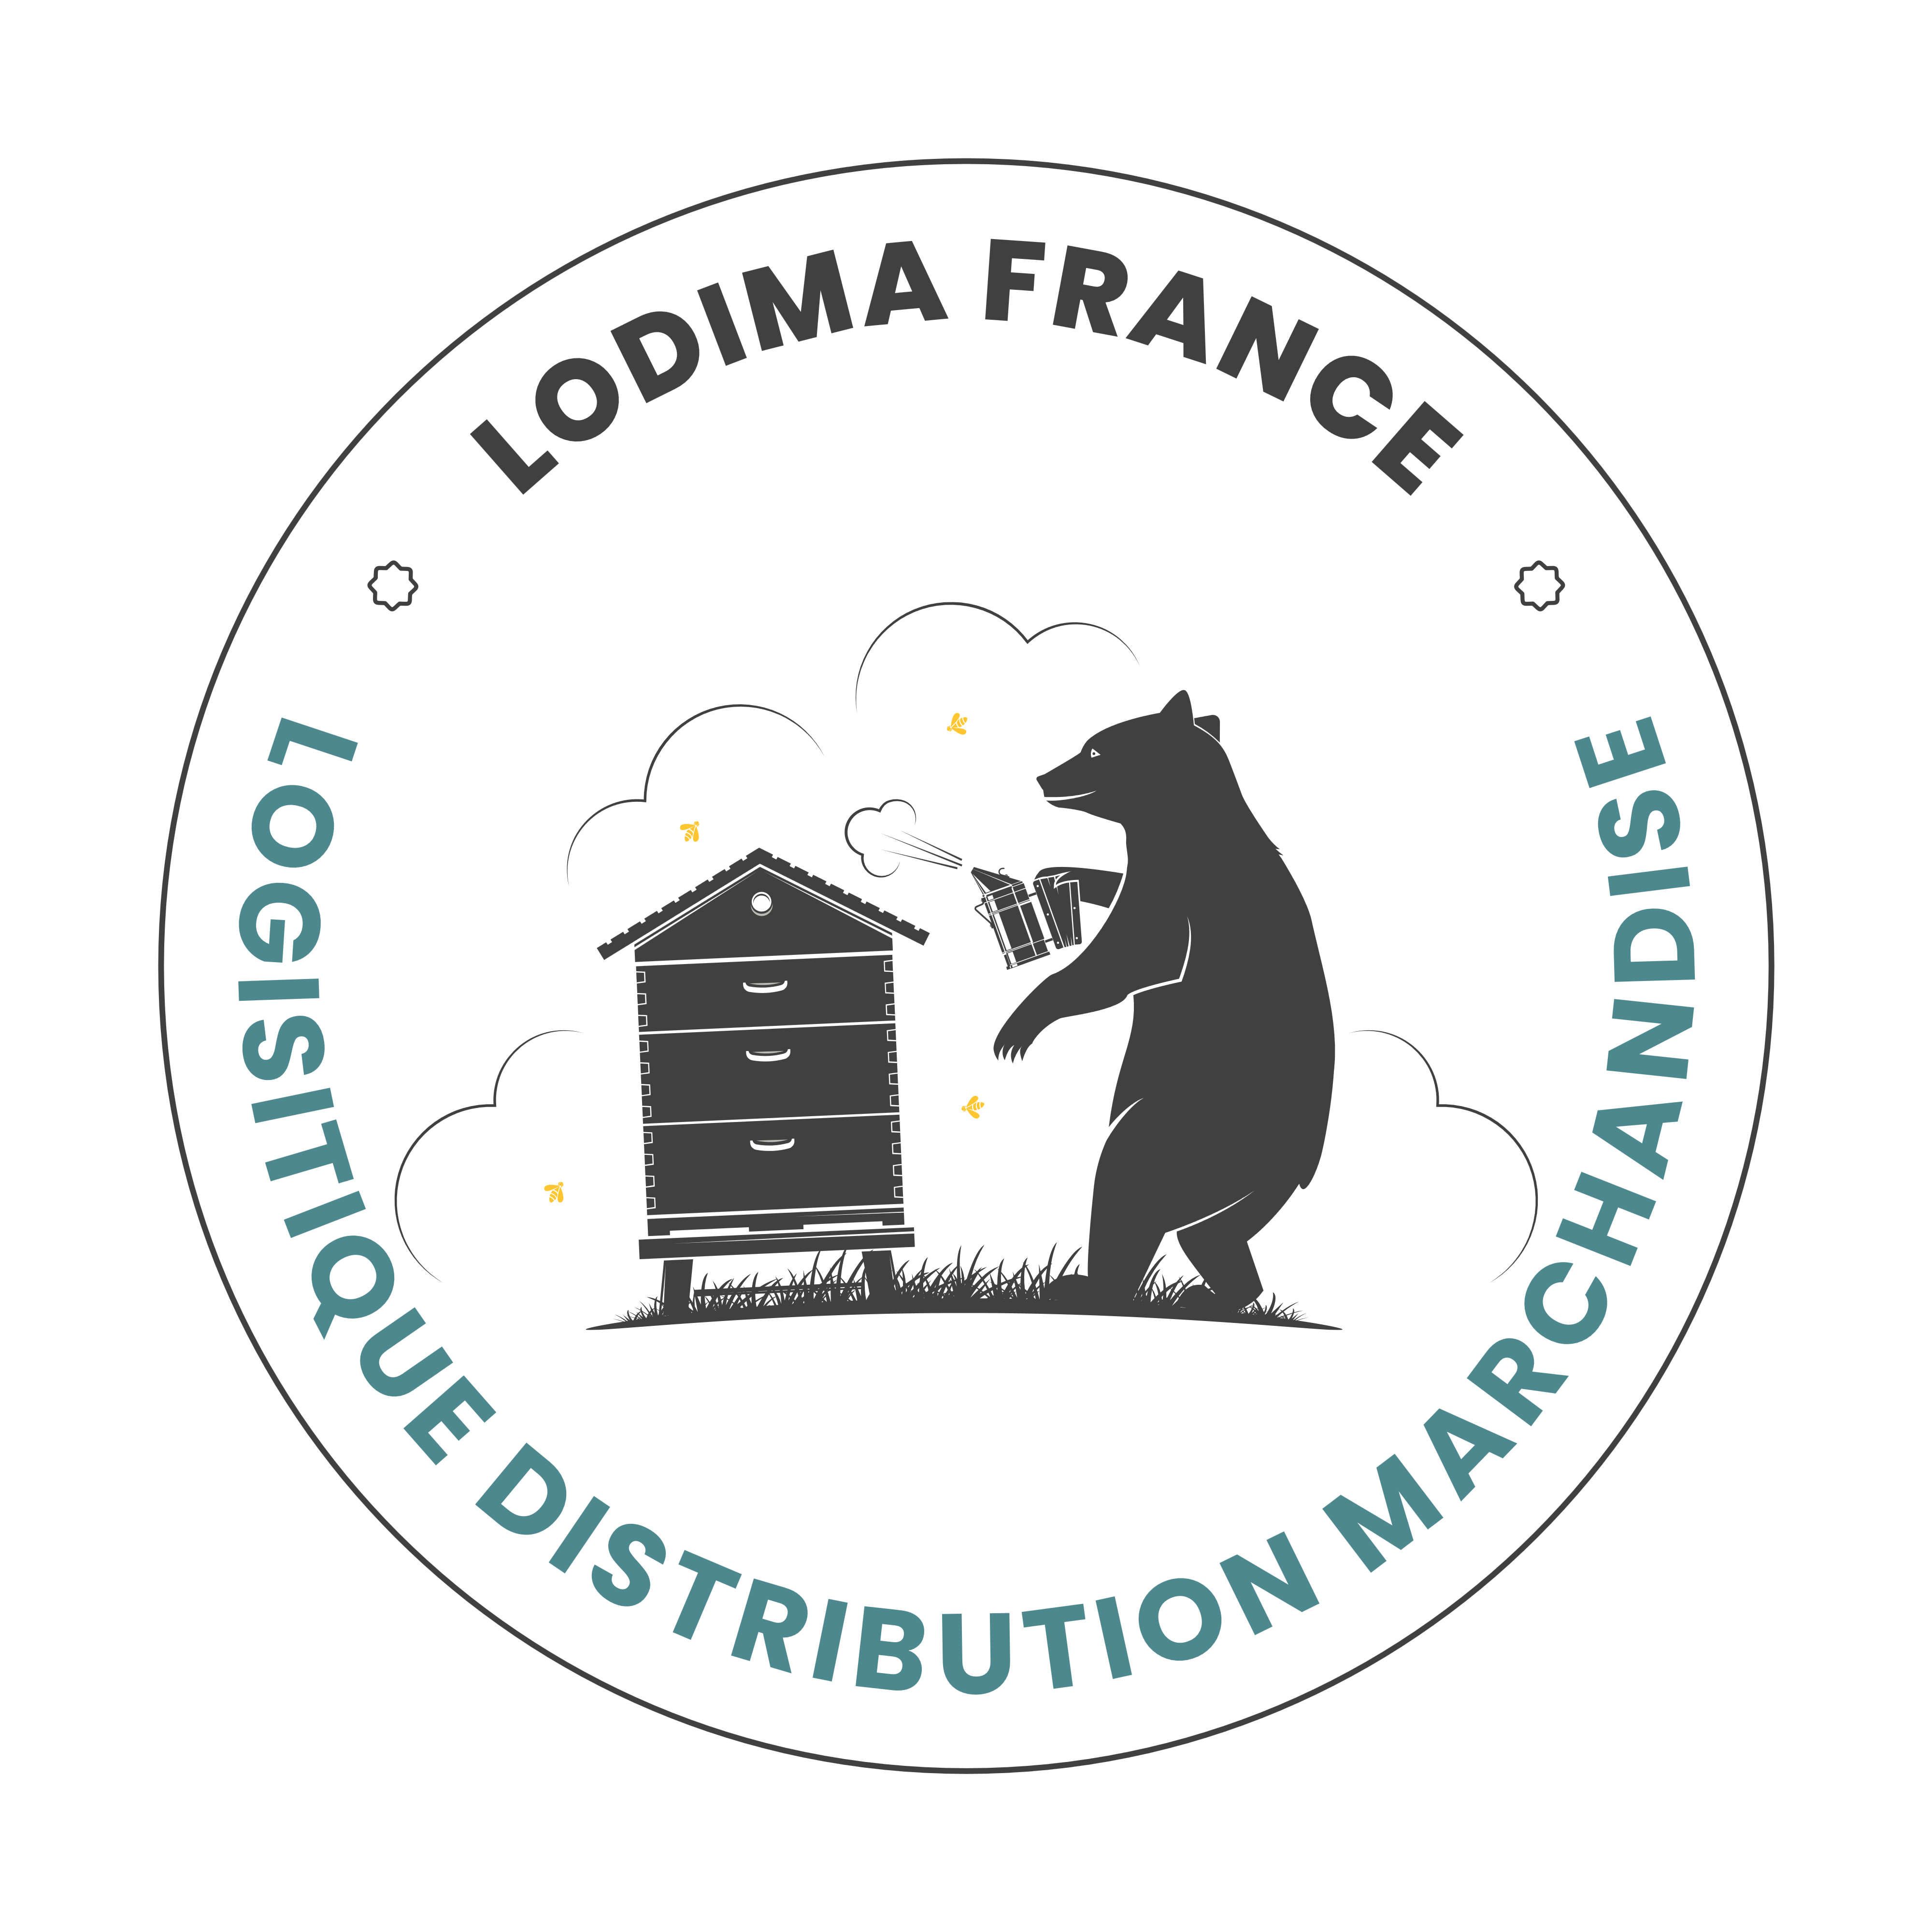 Lodima-France